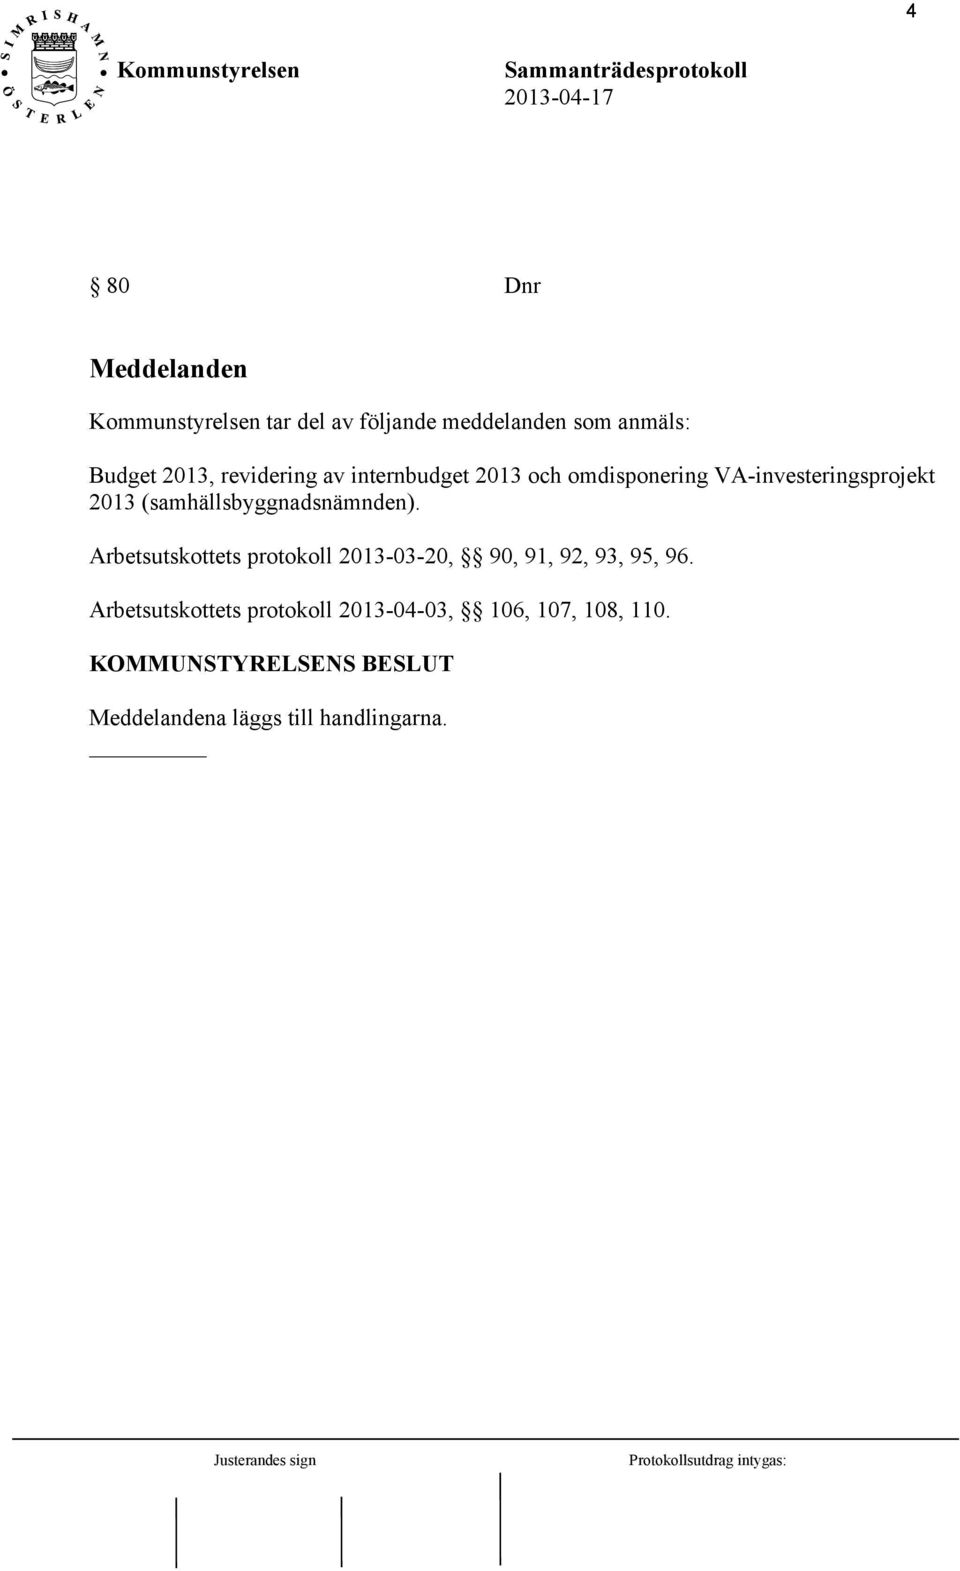 Arbetsutskottets protokoll 2013-03-20, 90, 91, 92, 93, 95, 96.